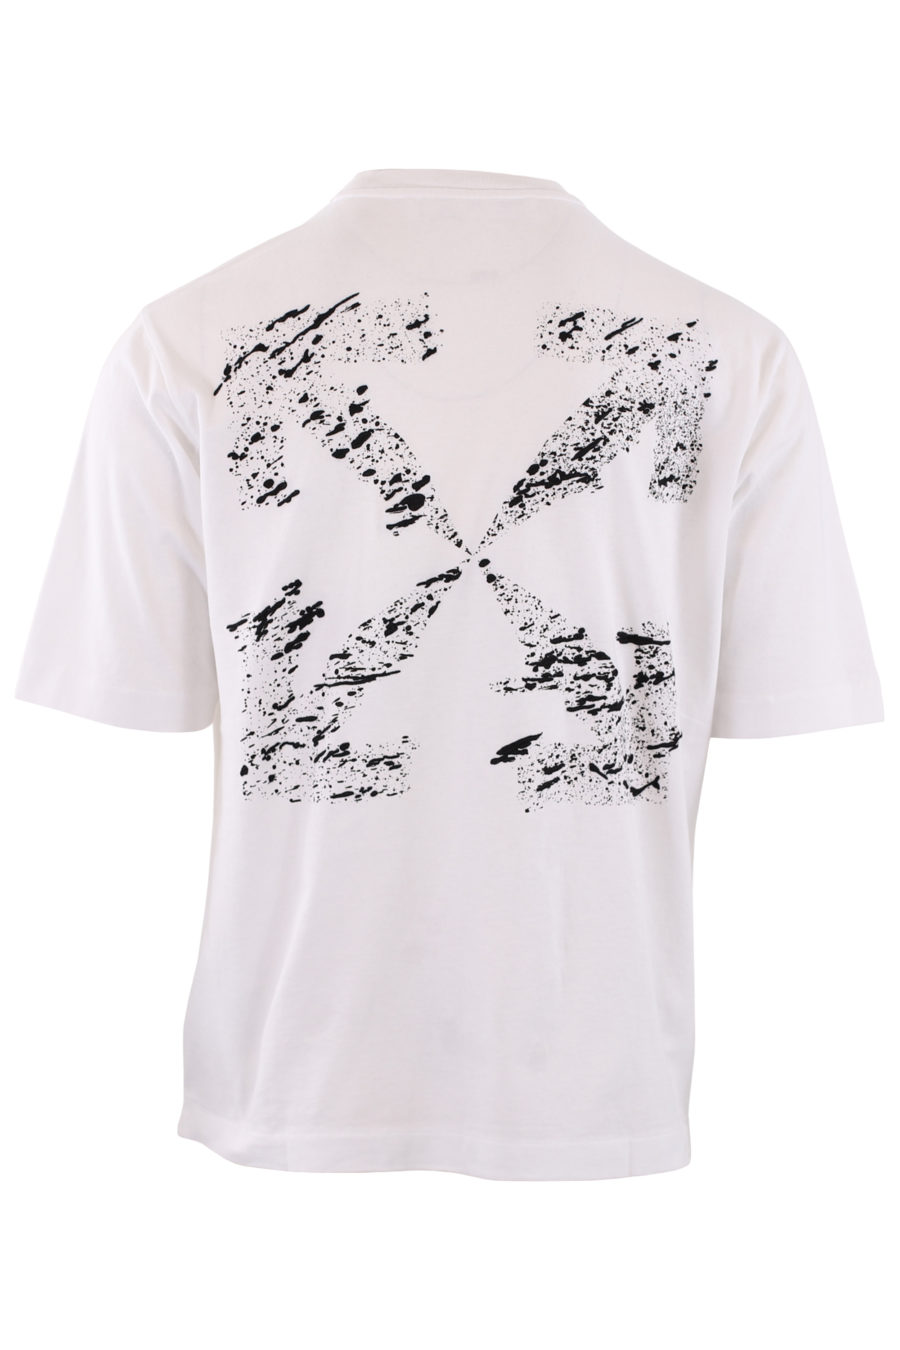 Camiseta blanca con logo bordado "Arrows" - IMG1 9238